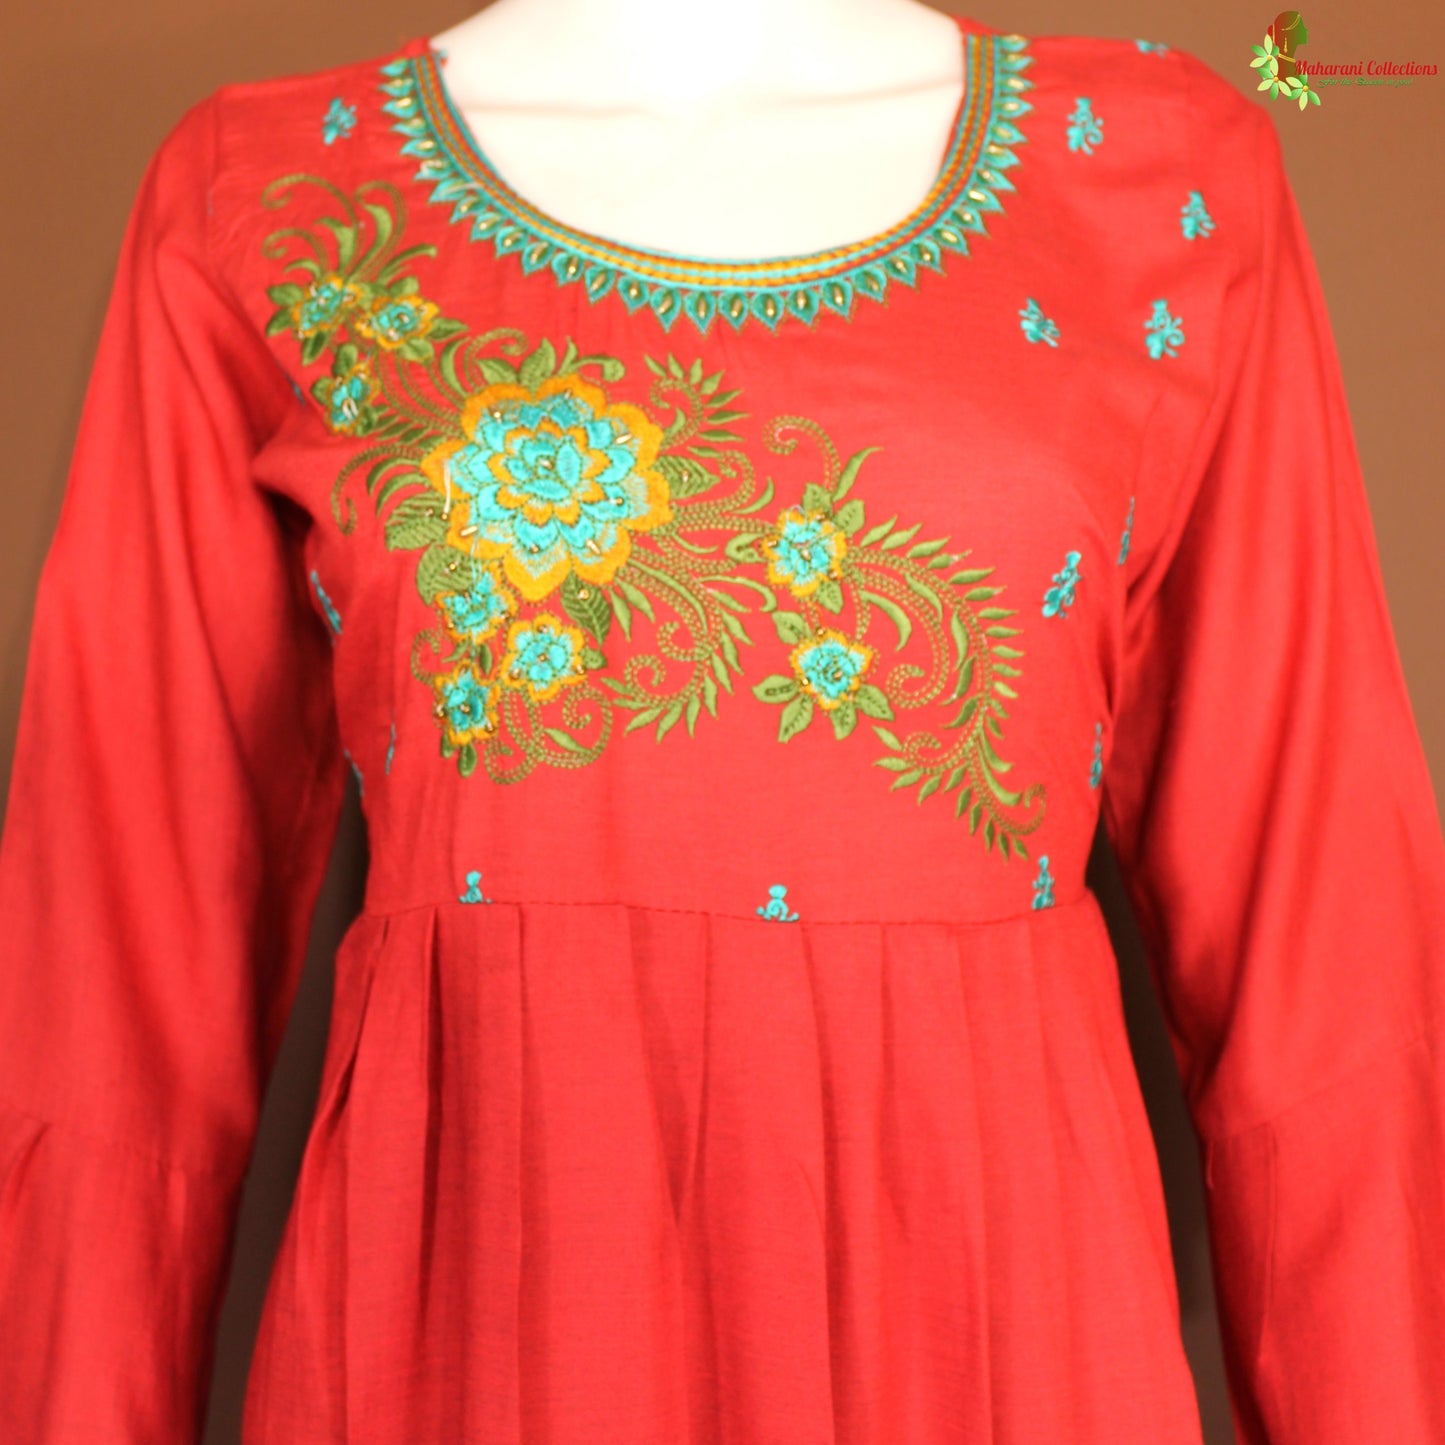 Maharani's Long Dress - Soft Cotton - Red (M)